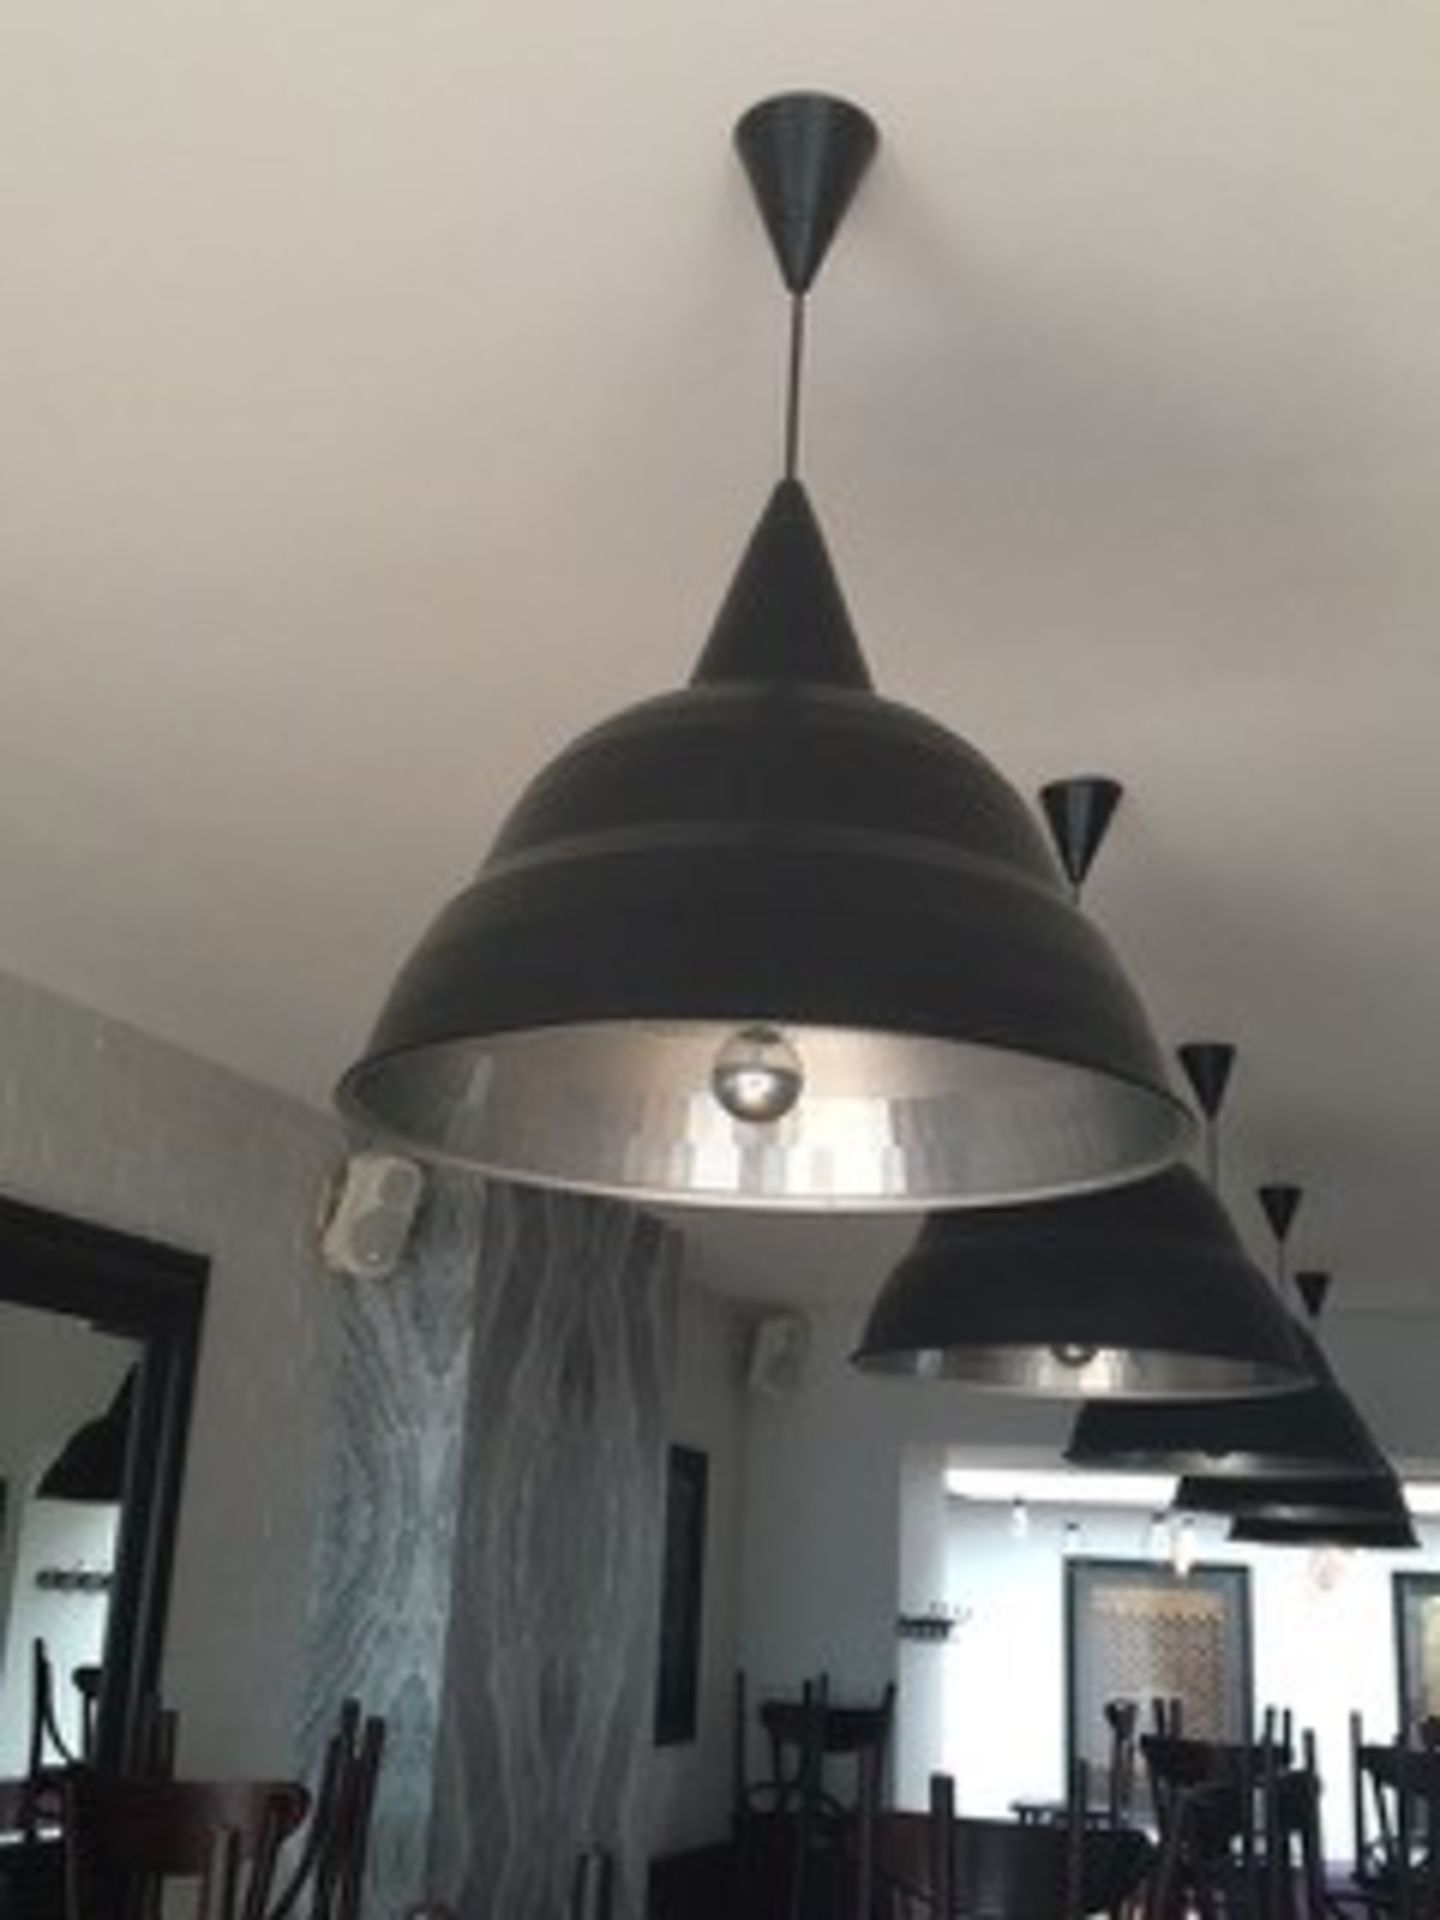 7 x Large Retro Industrial-style Pendant Ceiling Light Fittings - Colour: Black / White - Stylish